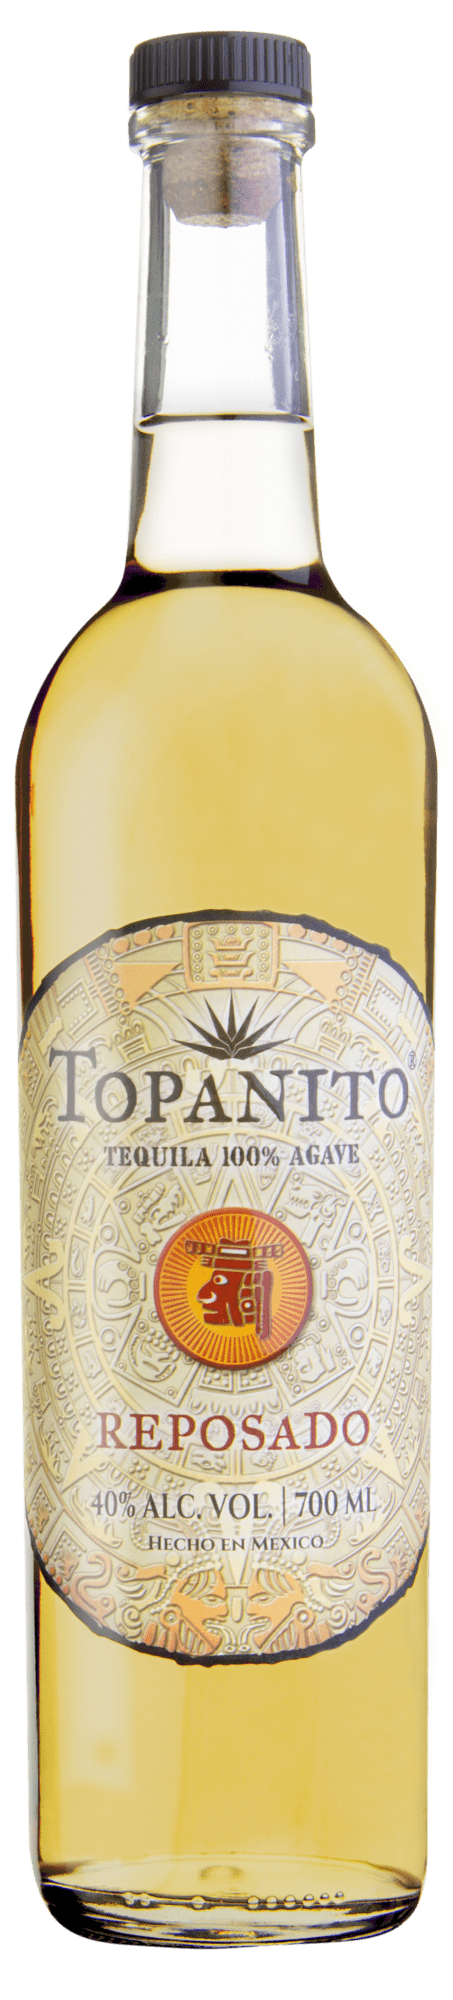 Topanito Reposado 100% Agave Tequila